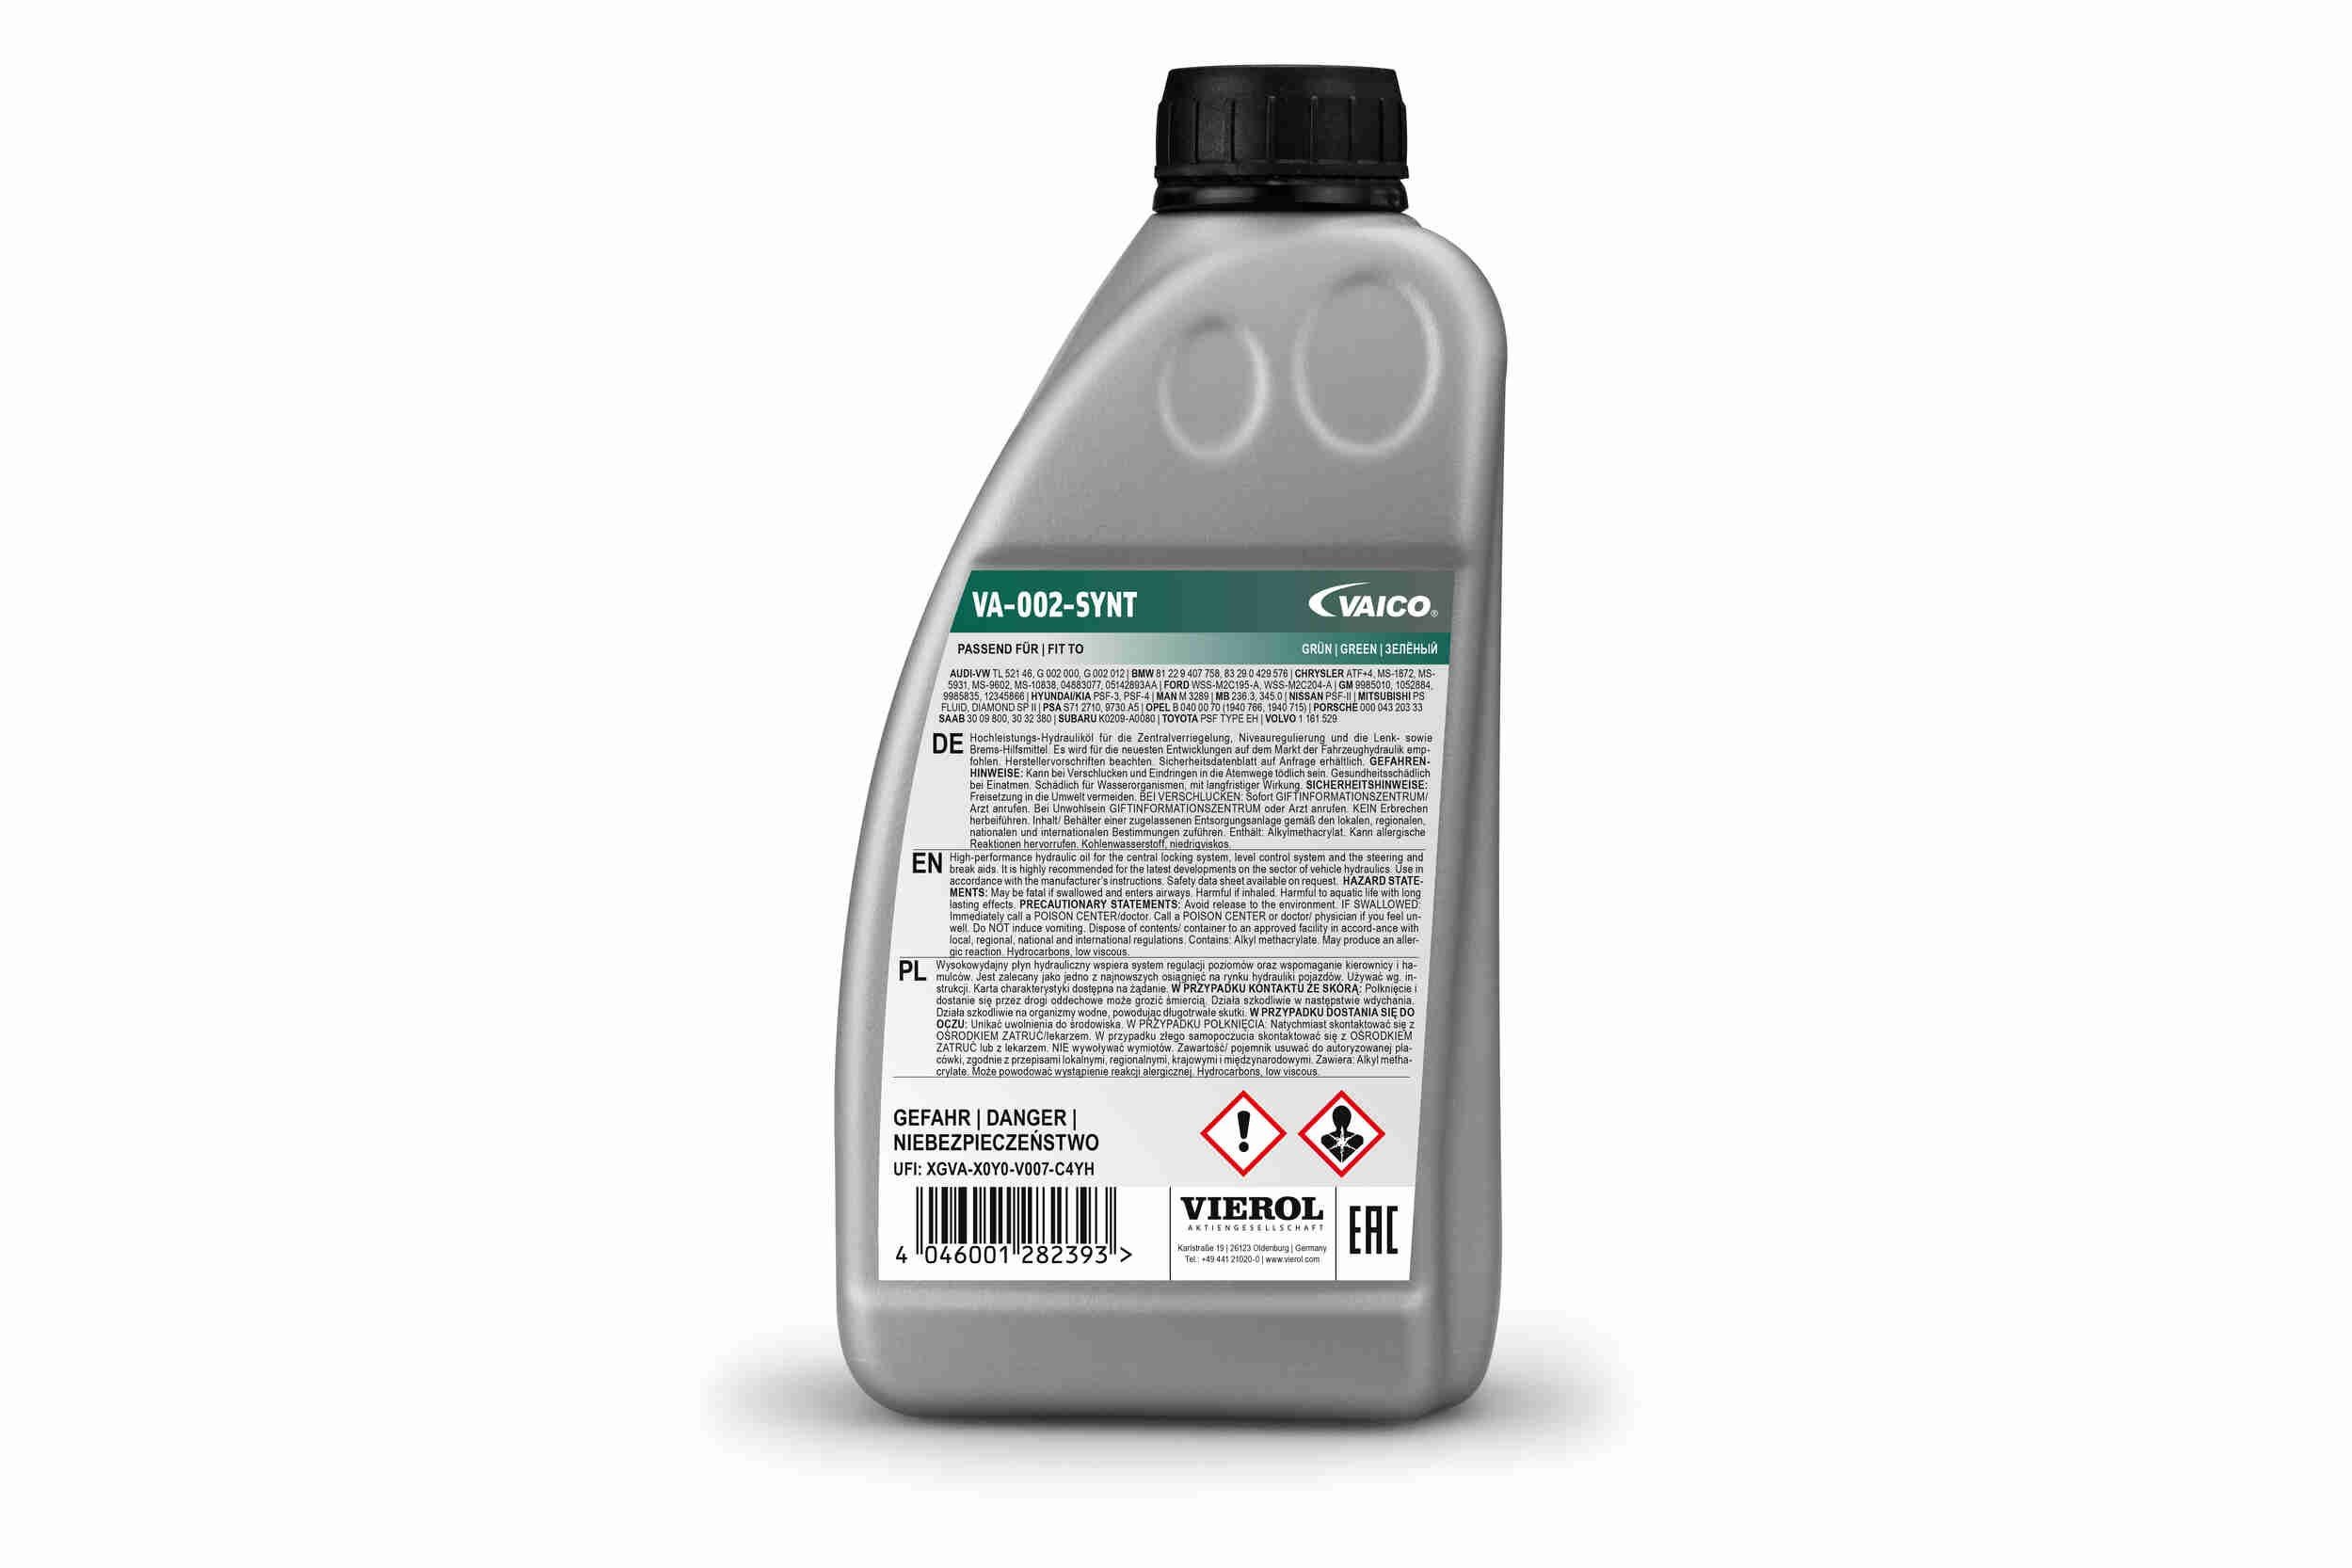 V60-0018 VAICO Sentralhydraulikk olje Q+, original equipment manufacturer  quality MADE IN GERMANY ▷ AUTODOC pris og erfaringer